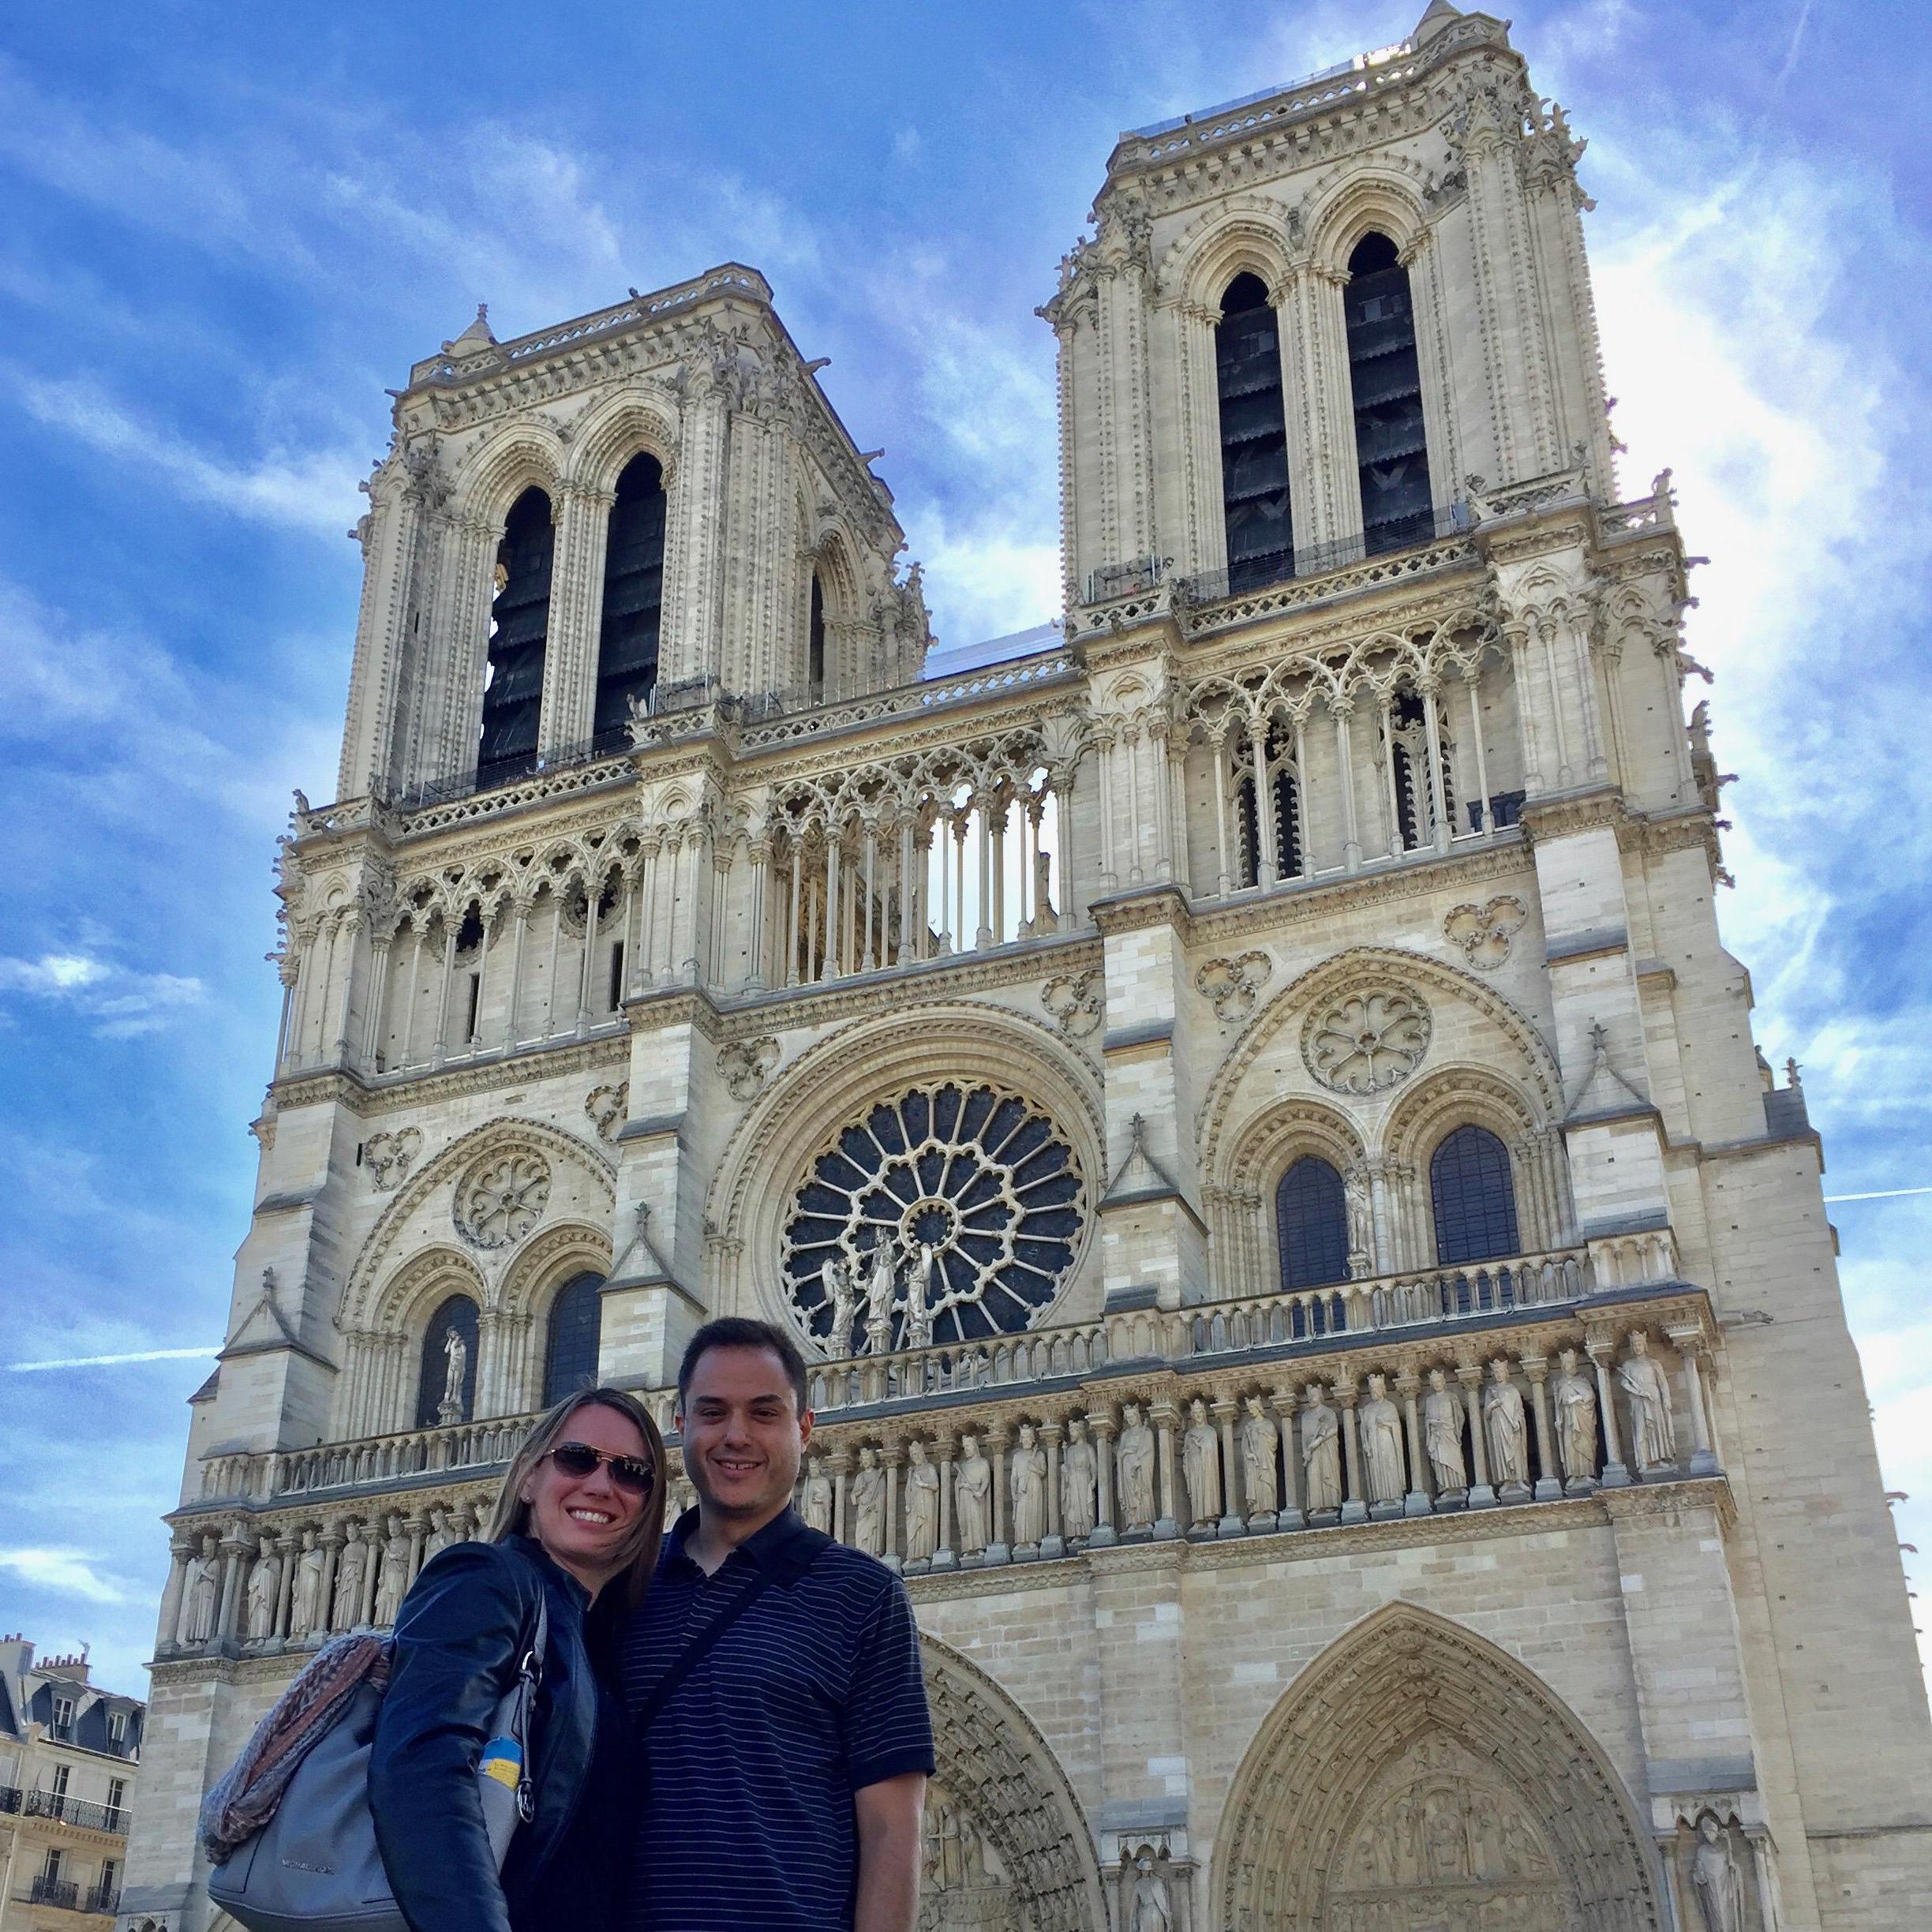 Notre Dame
Paris, May 2017